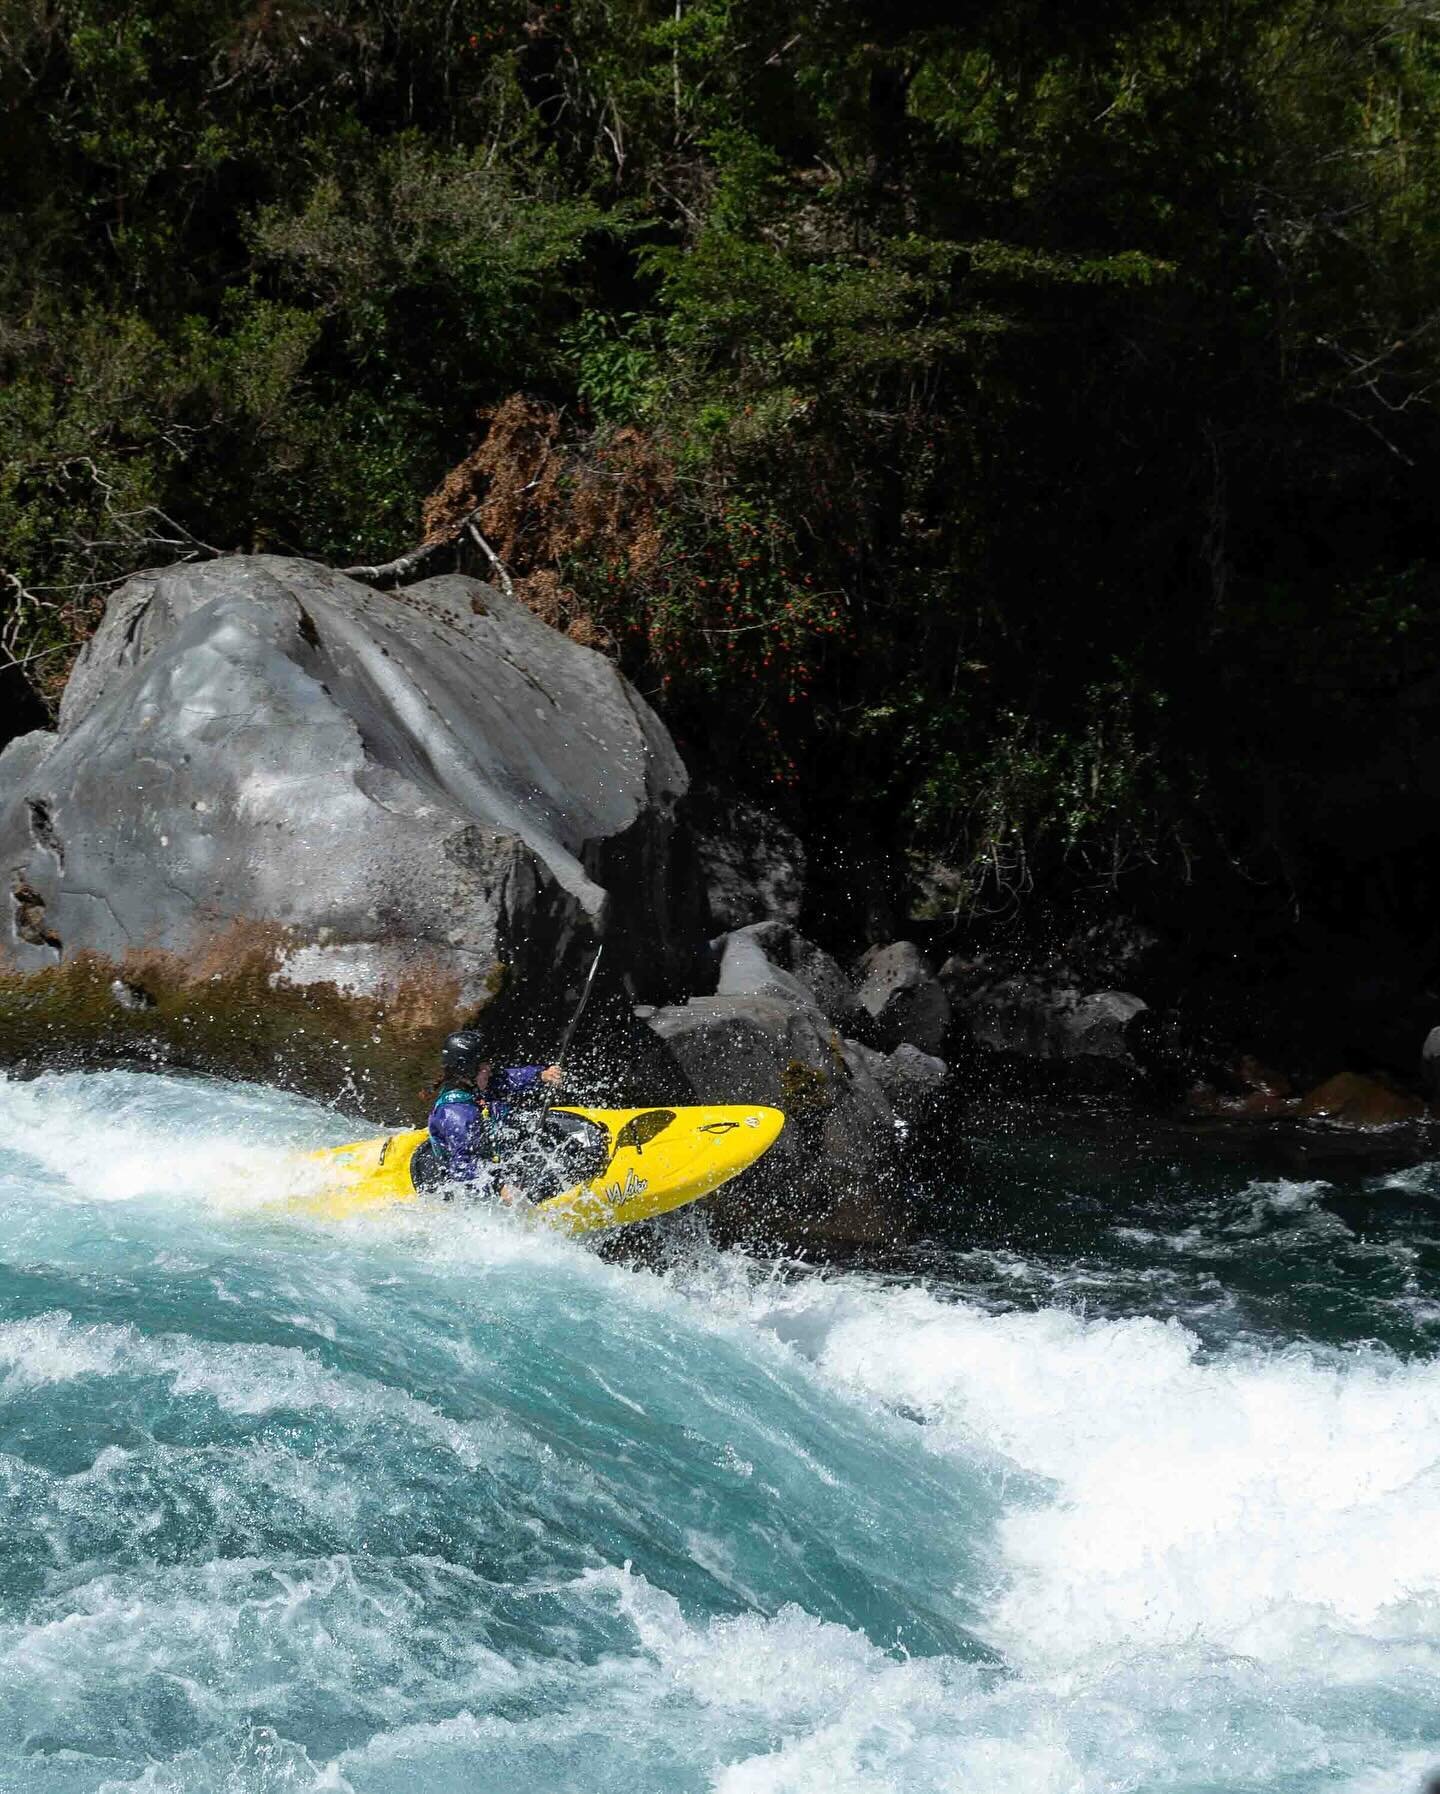 Fun times kayaking on the stunning Rio Fuy in Chile 🇨🇱 this January..
.
.
#kayakchile #riofuy #kayakpucon #kajakabenteuer